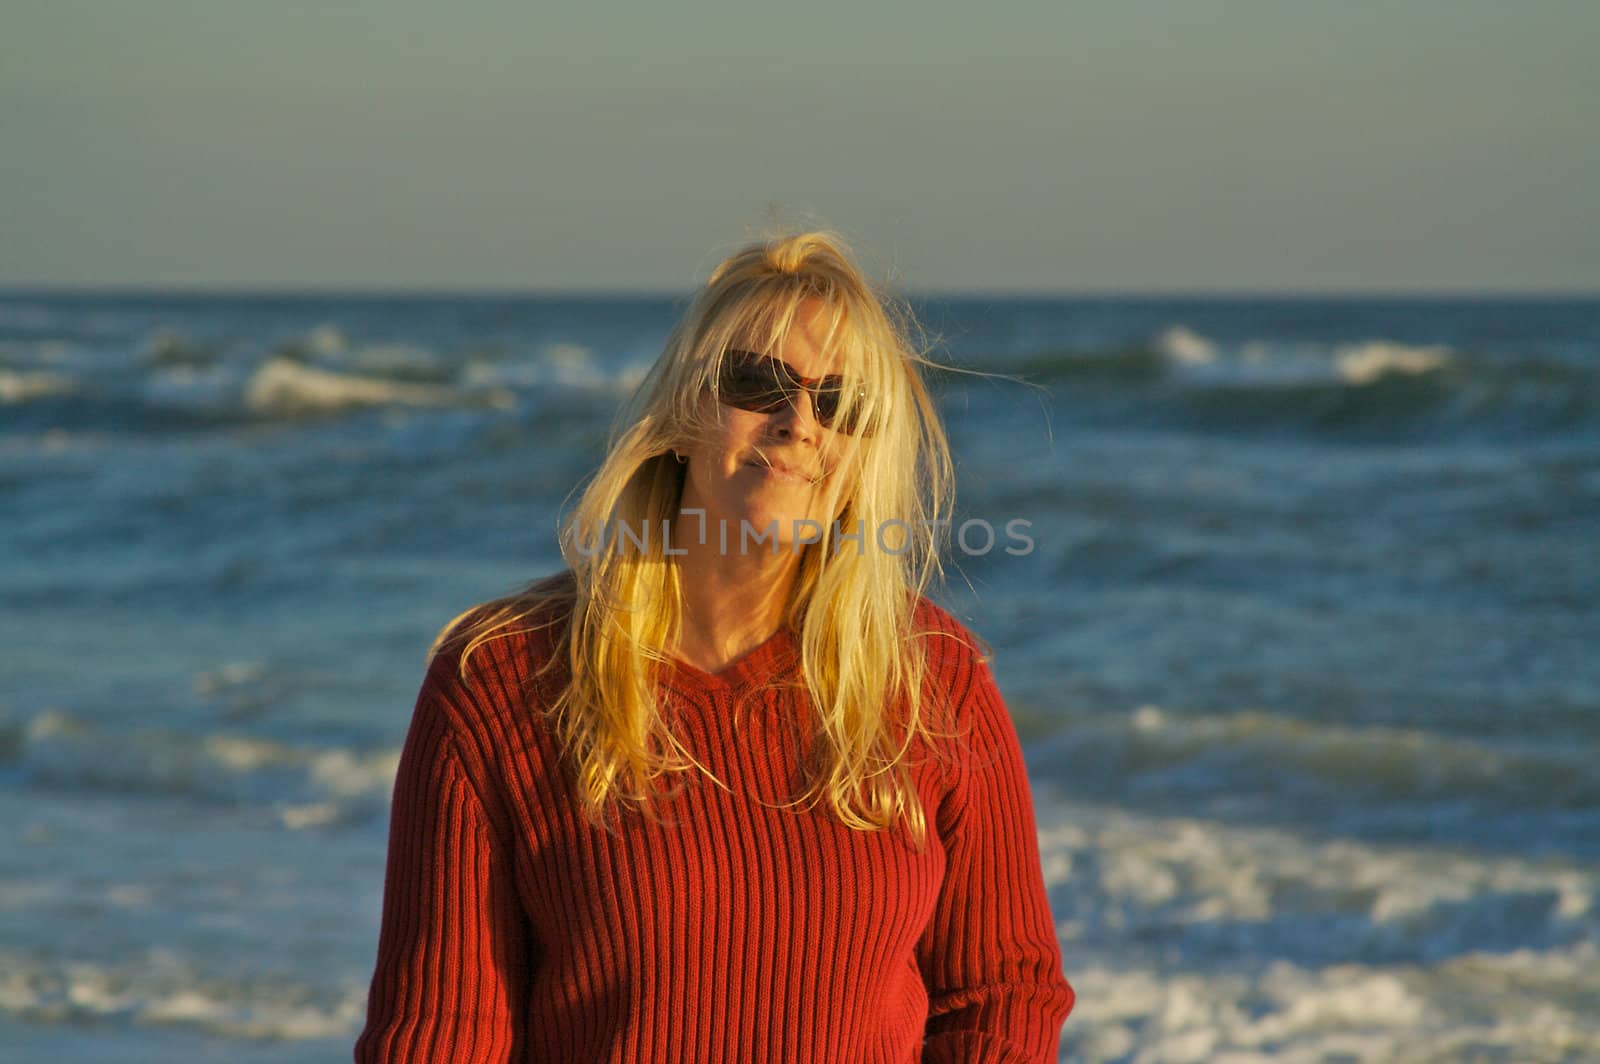 Beautiful woman on the beach at sunset. Hair wonderfully enjoying the breeze.